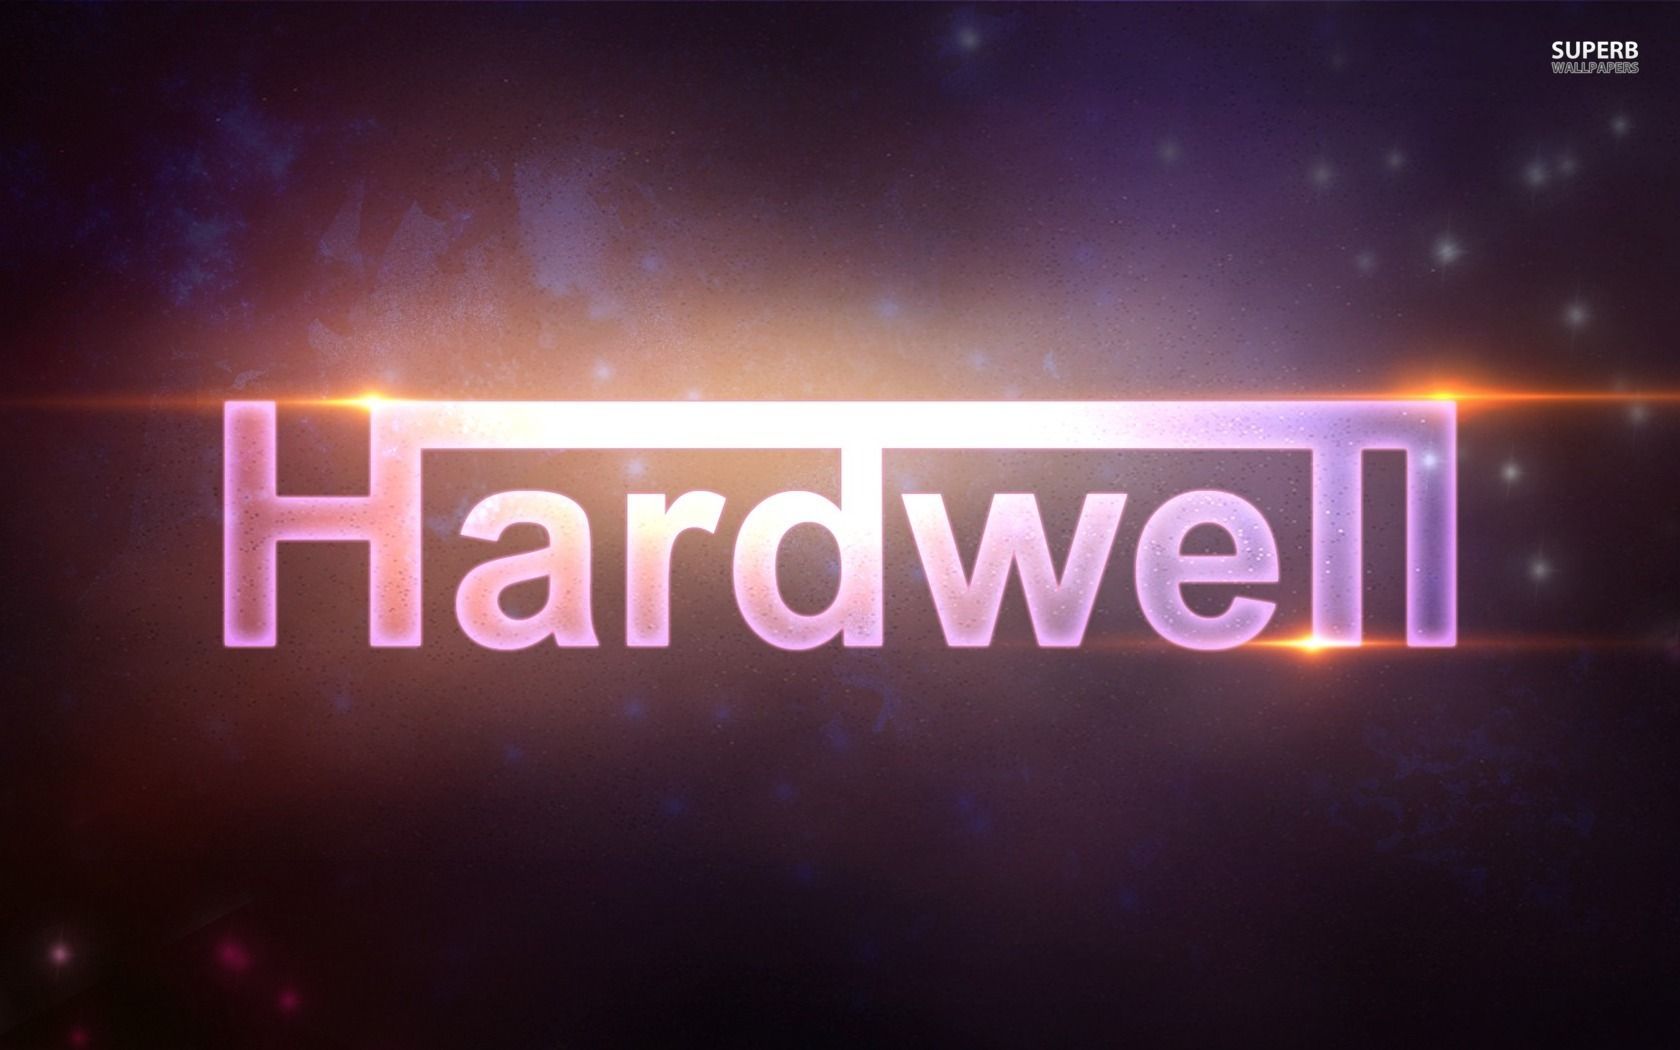 Hardwell Wallpaper and Top Mix. Hardwell logo, Edm music, Ultra music festival